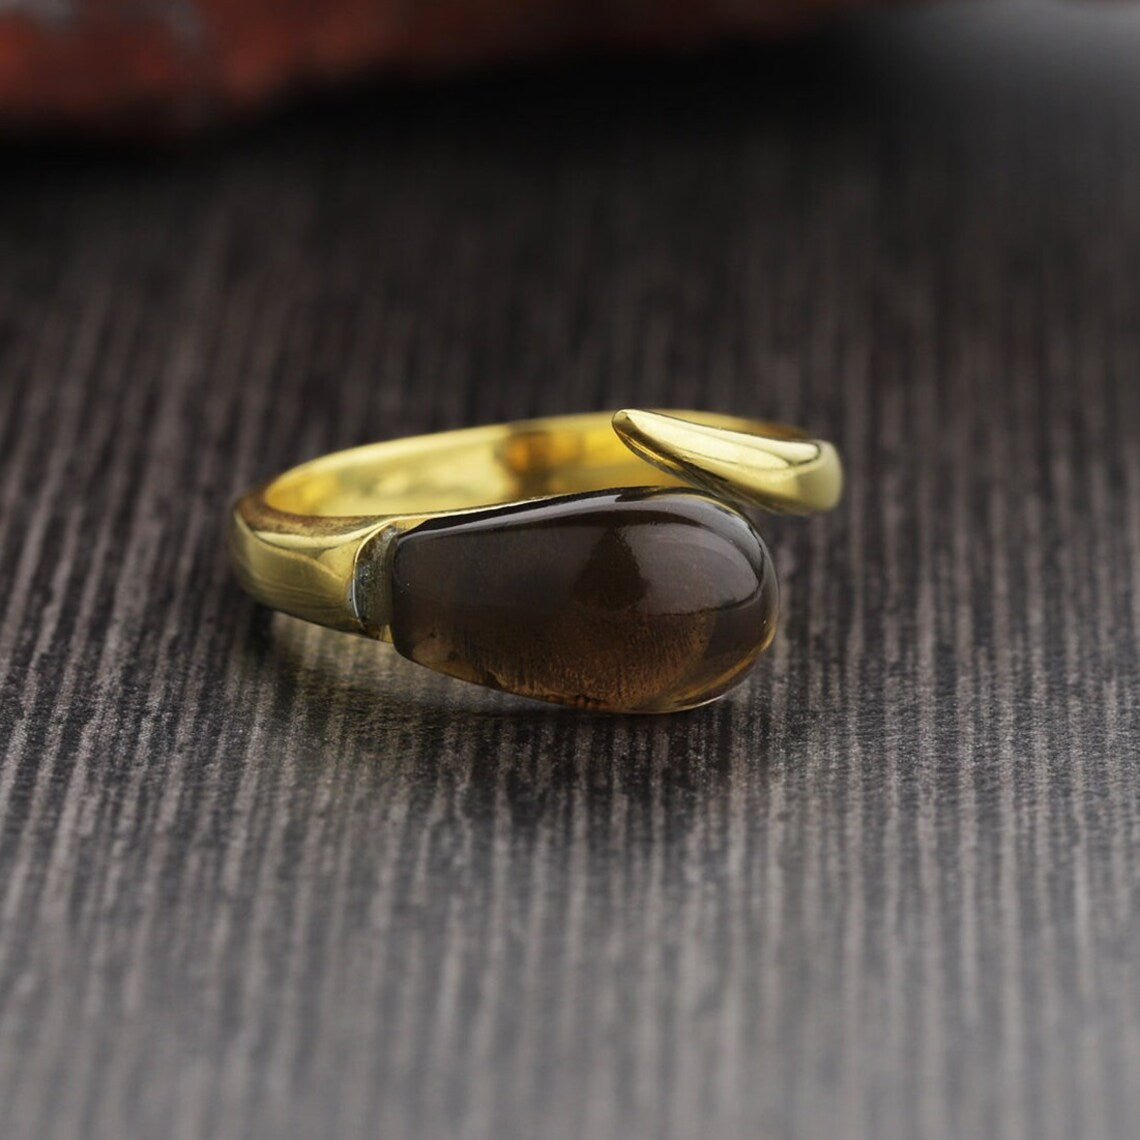 Smoky Quartz Ring - Dolphin Shape Ring - Smokey Quartz Gold Ring - Smoky Gemstone Ring - Stacking Ring - Adjustable